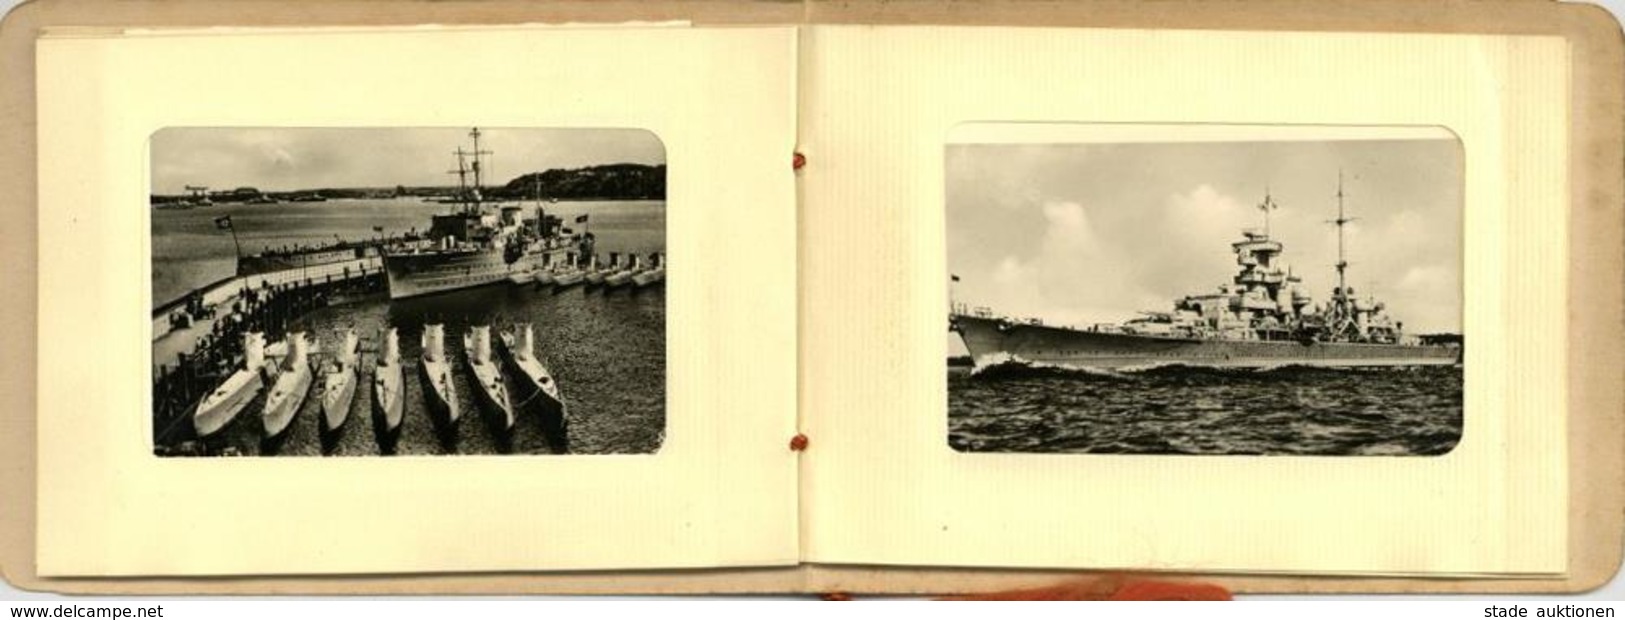 Schiff Kreuzer WK II Die Deutsche Flotte Kleines Fotoalbum Mit 12 Fotos I-II (fleckig) Bateaux Bateaux - Warships